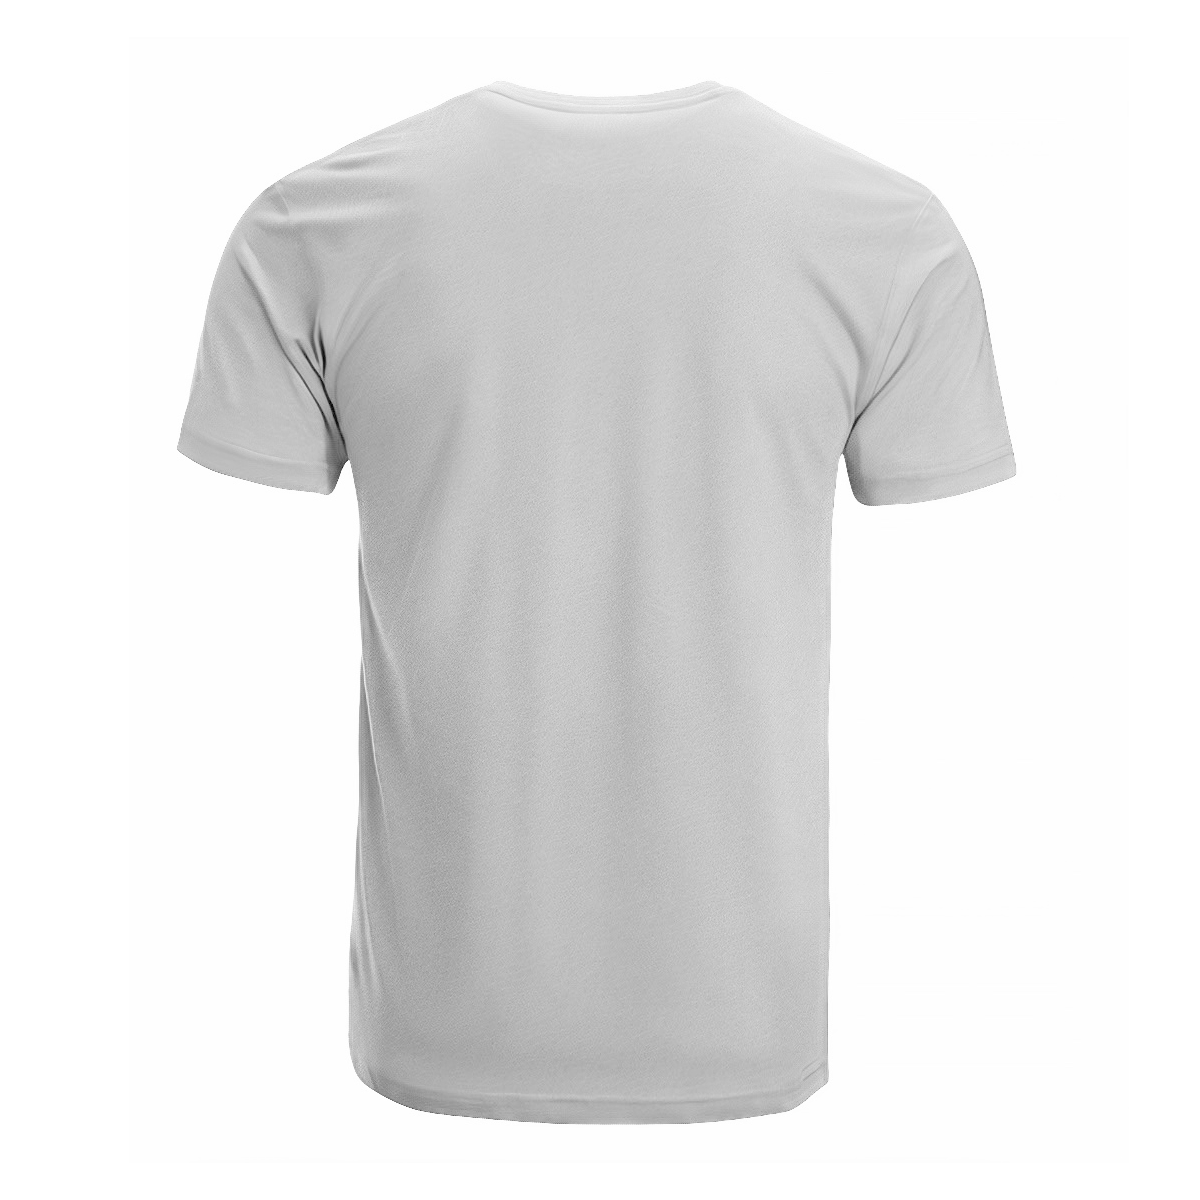 Calder 2 Tartan Crest T-shirt - I'm not yelling style